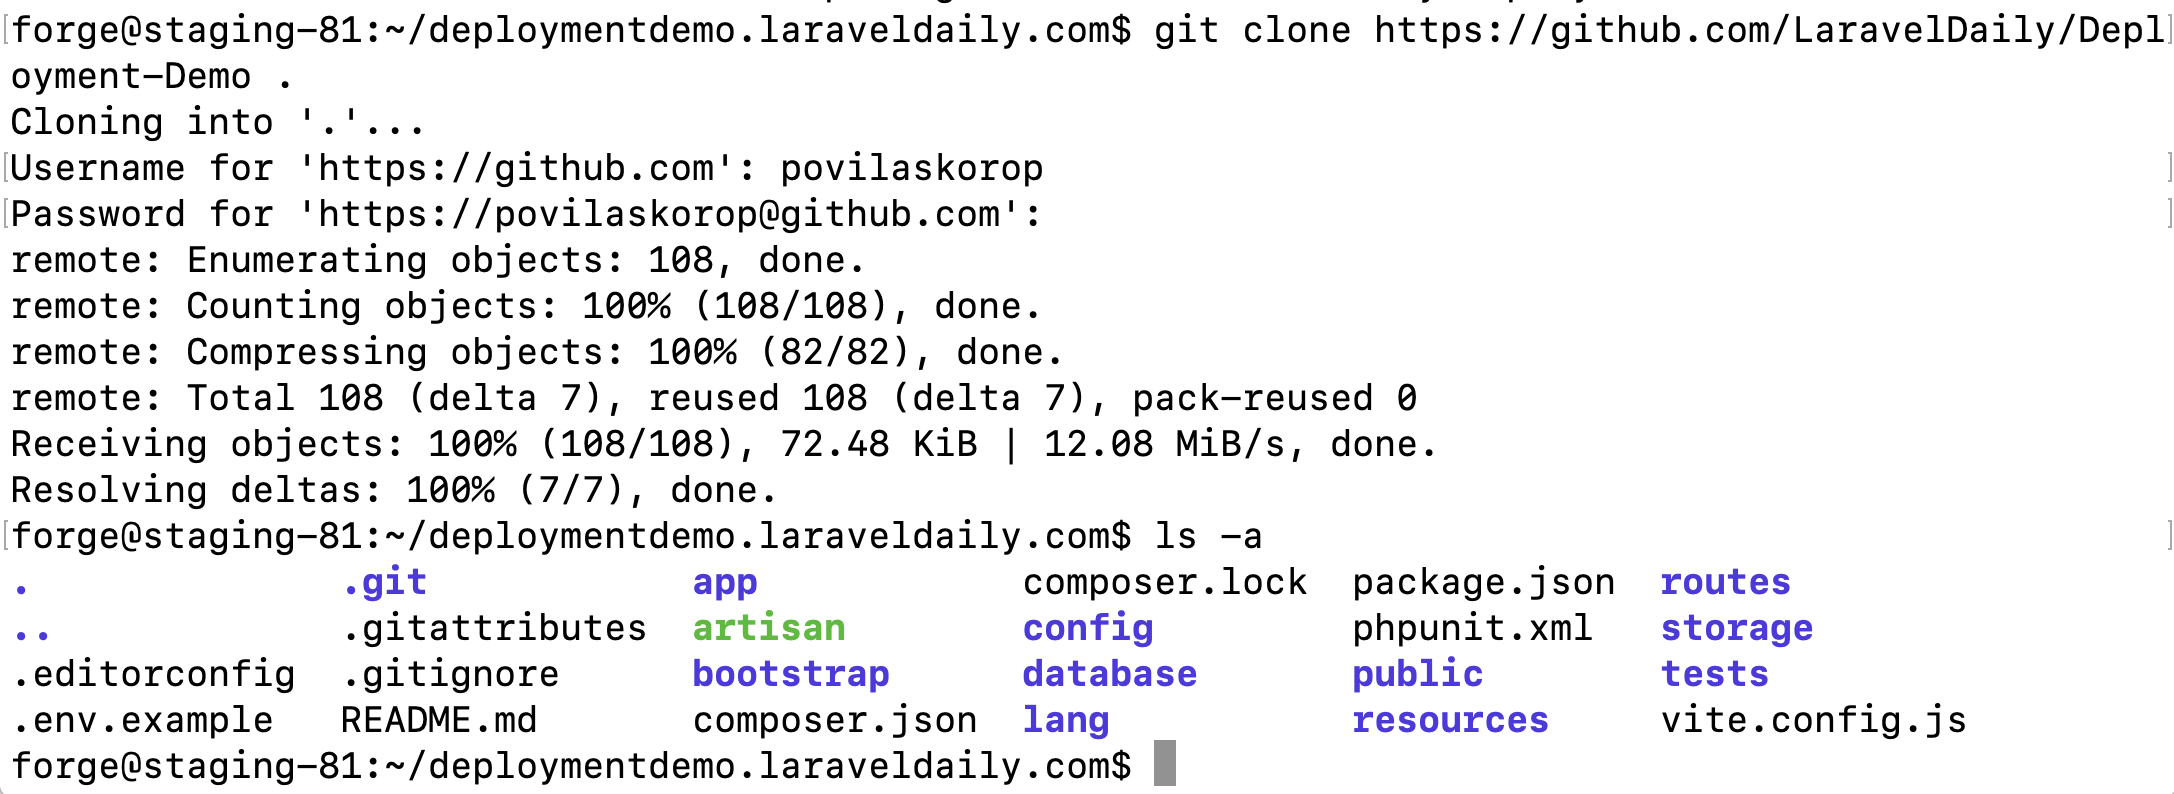 laravel deployment cloned repository